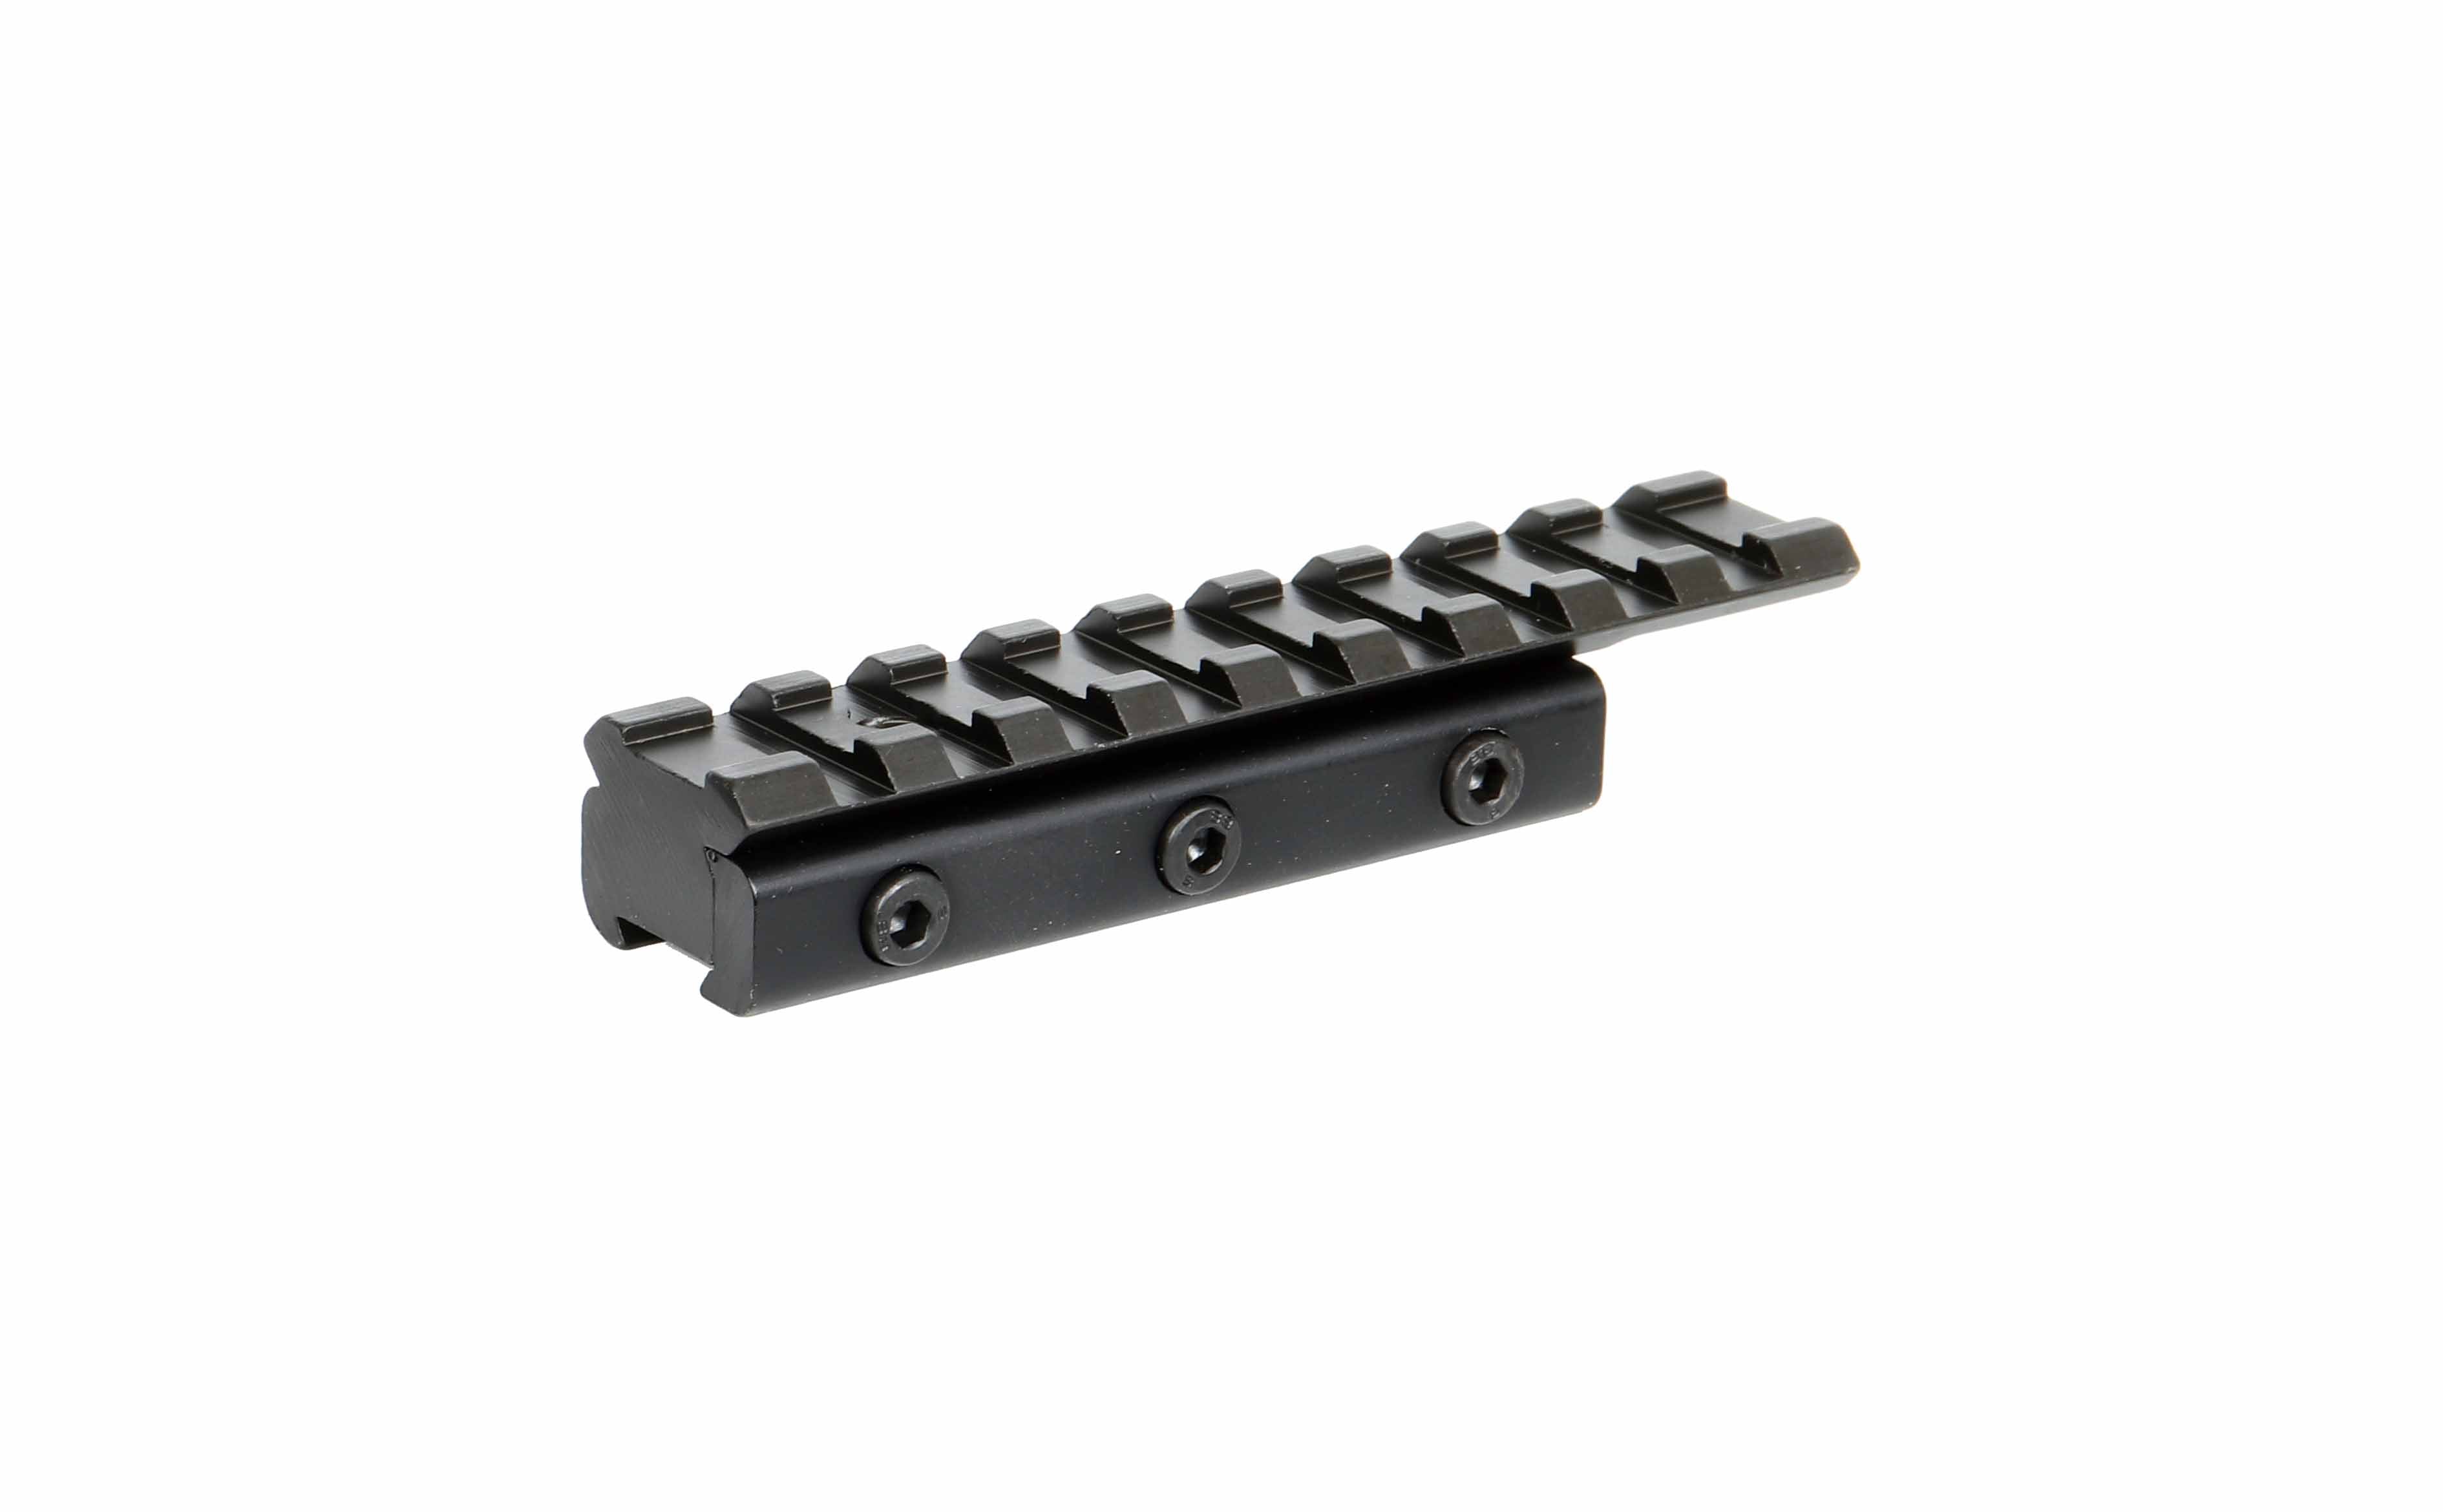 Pica-tinny Converter Rail (11mm to 25mm)